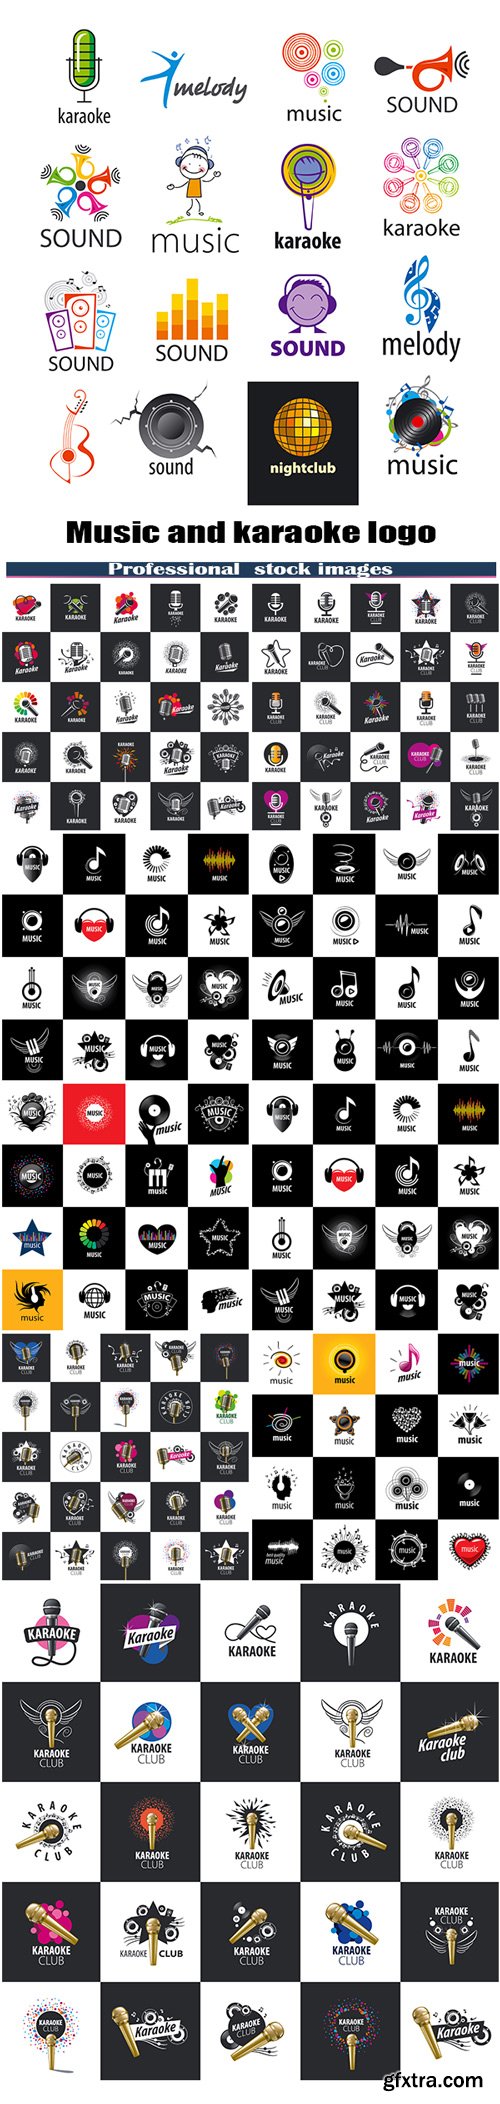 Music and karaoke logo